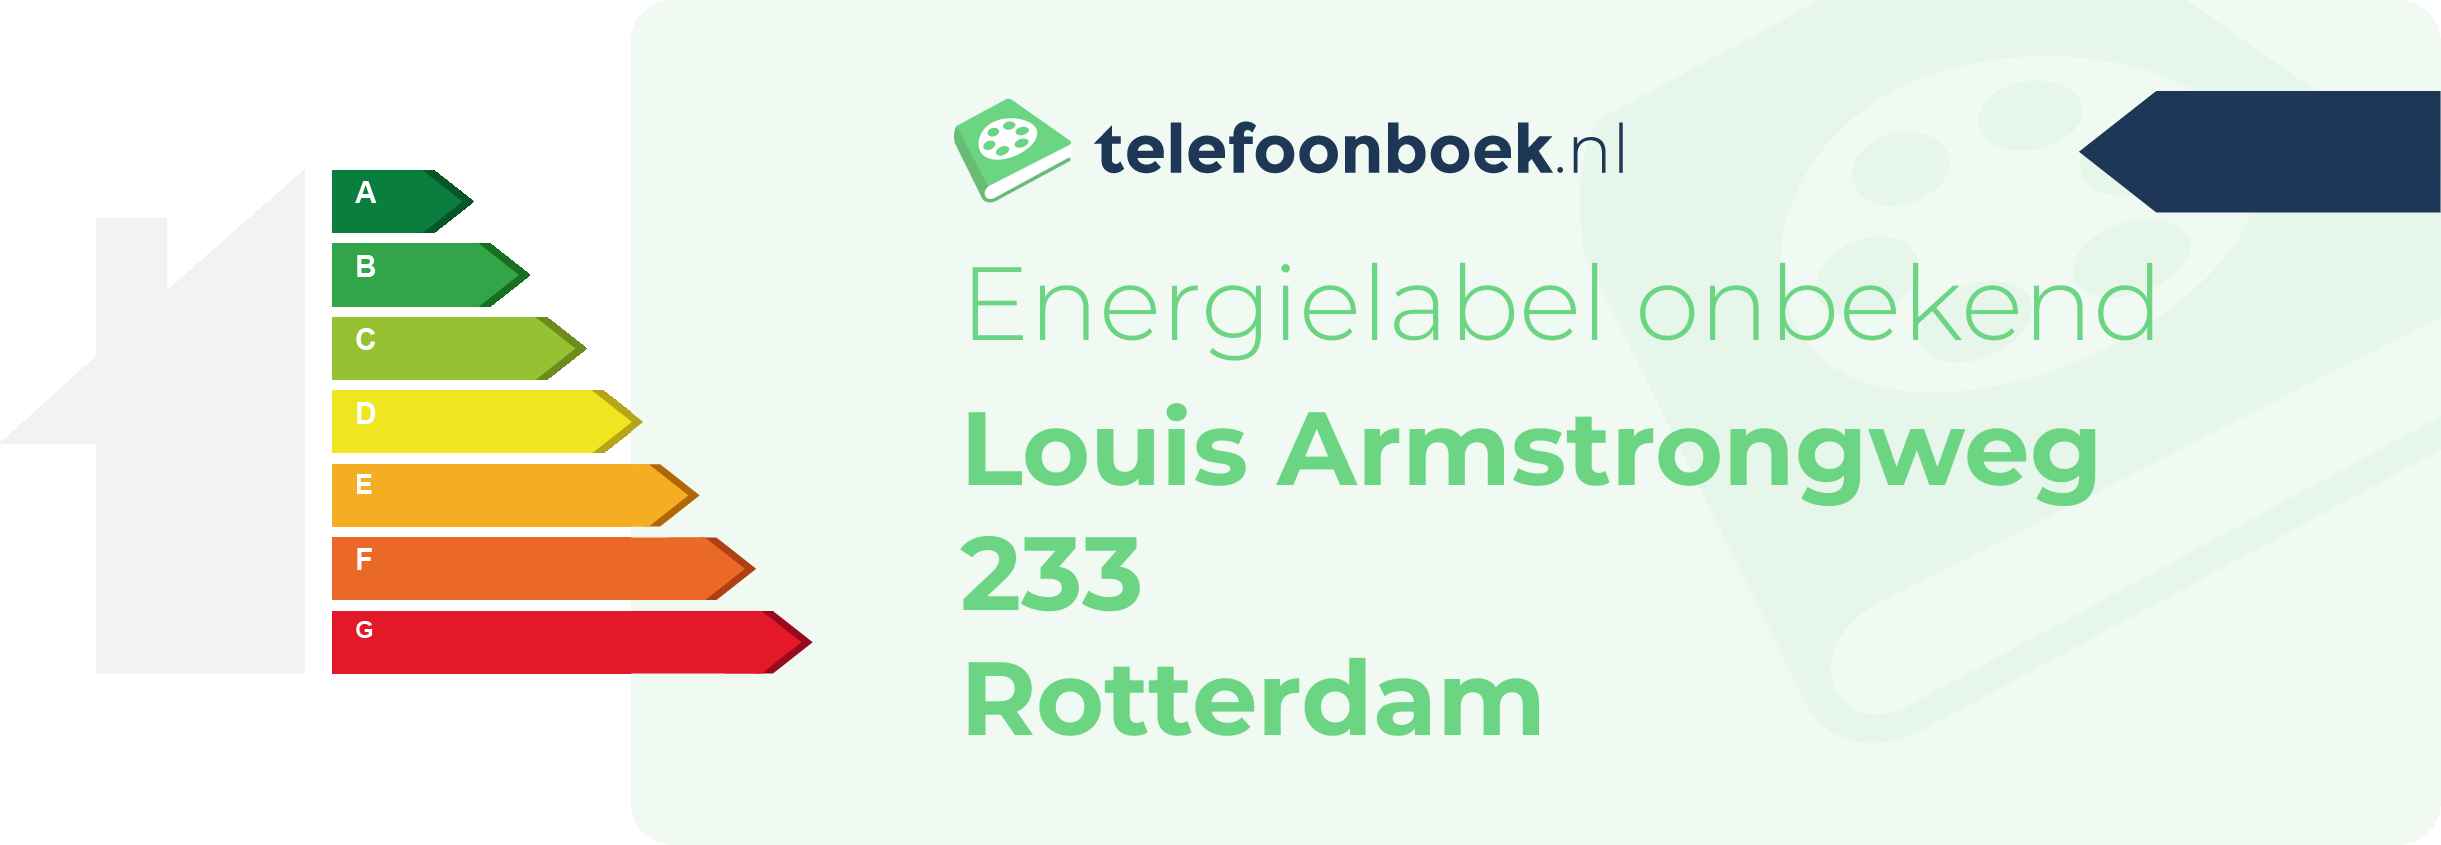 Energielabel Louis Armstrongweg 233 Rotterdam